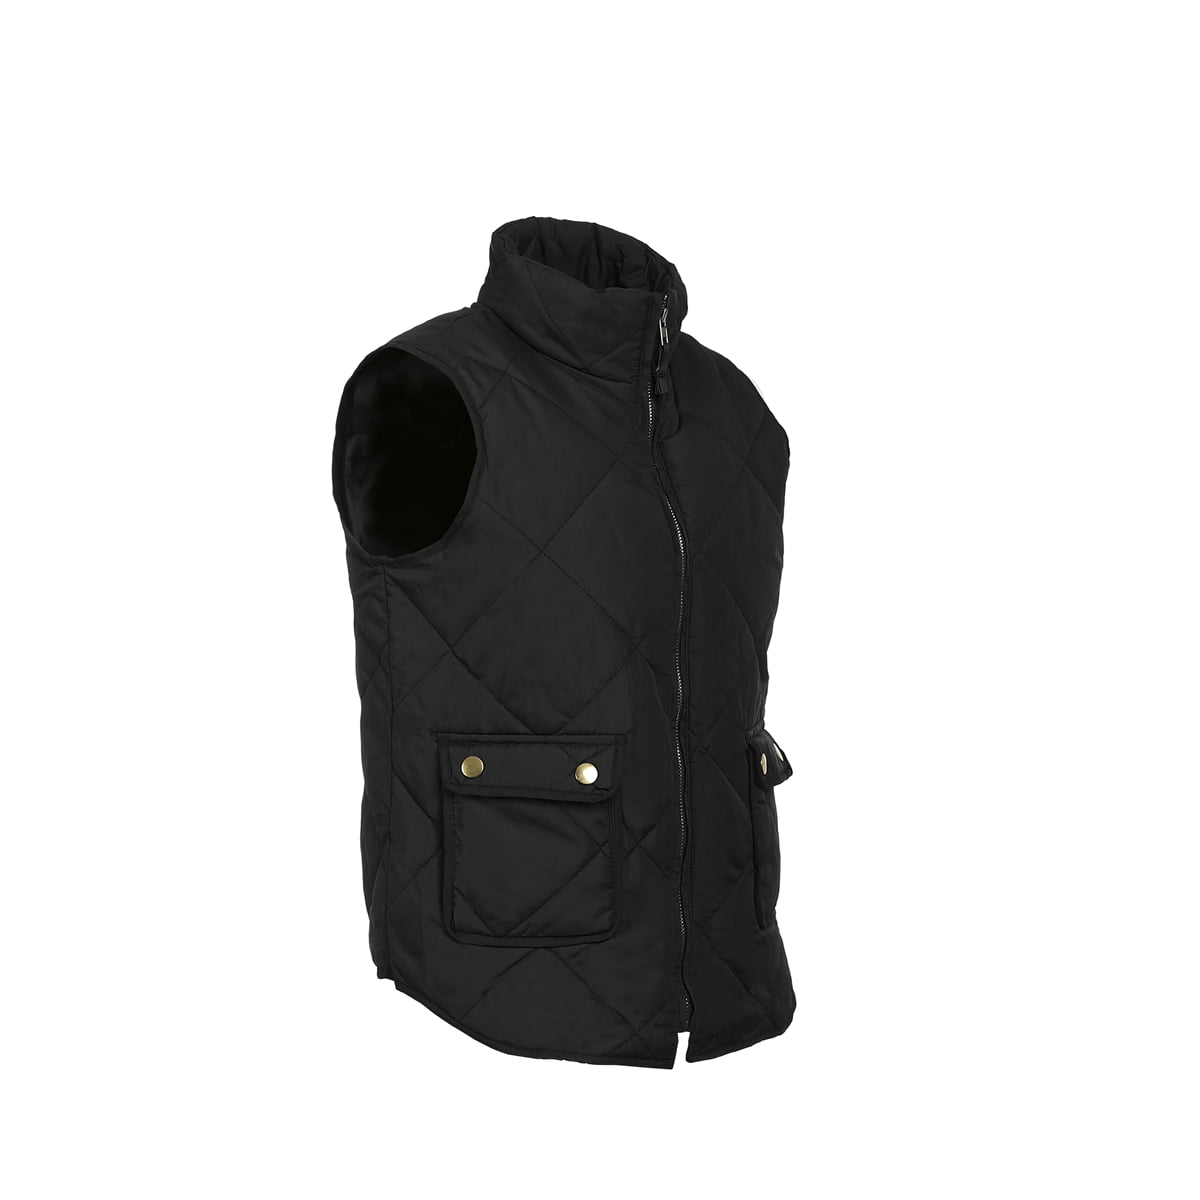 Details about   Winter Warm Mens Down sleeveless Waistcoat jacket outwear Puffer Vest coat M~3XL